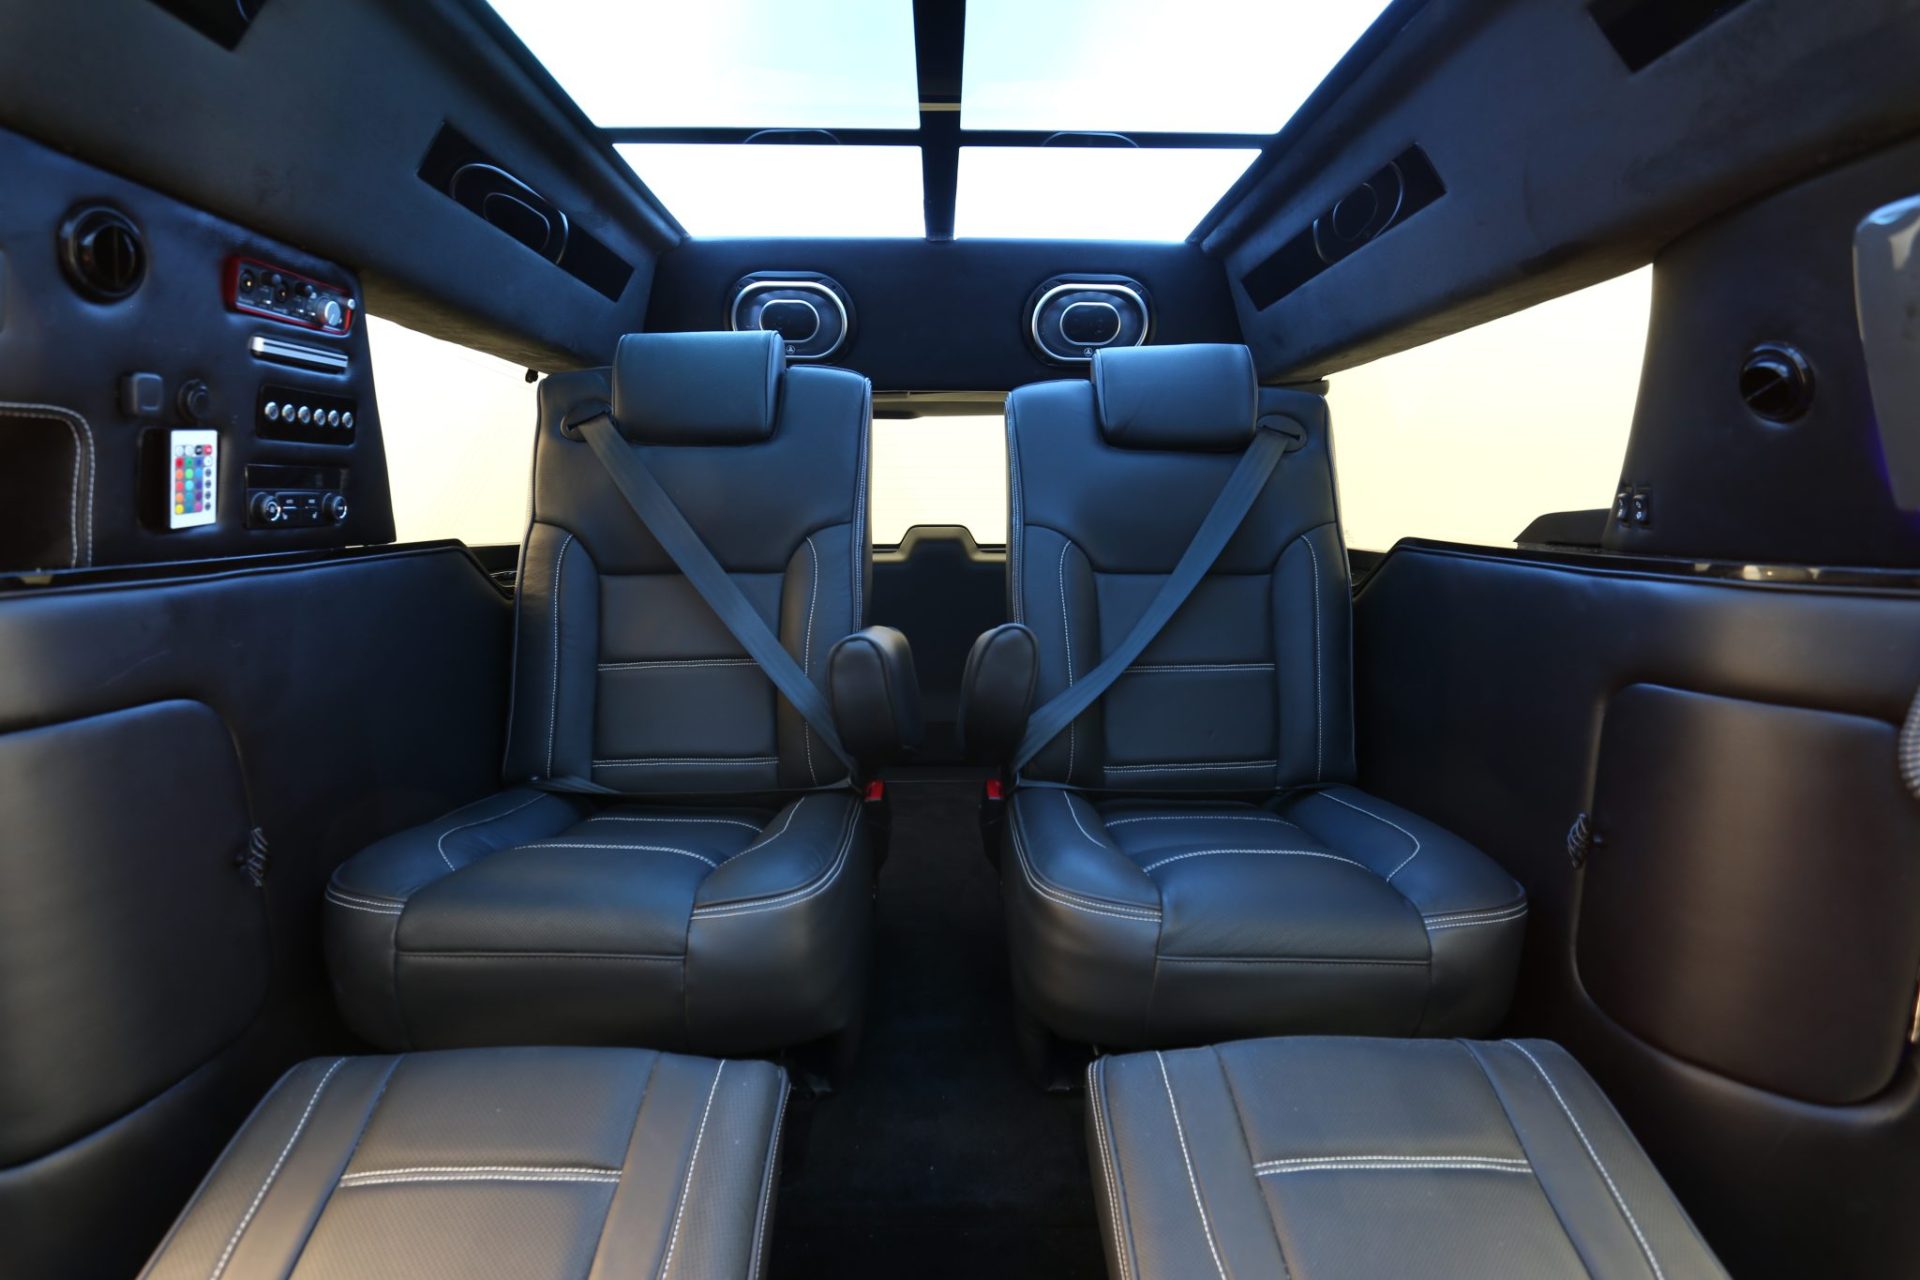 GMC Denali XL CEO Mobile Office Limousine - Interior Photo #4